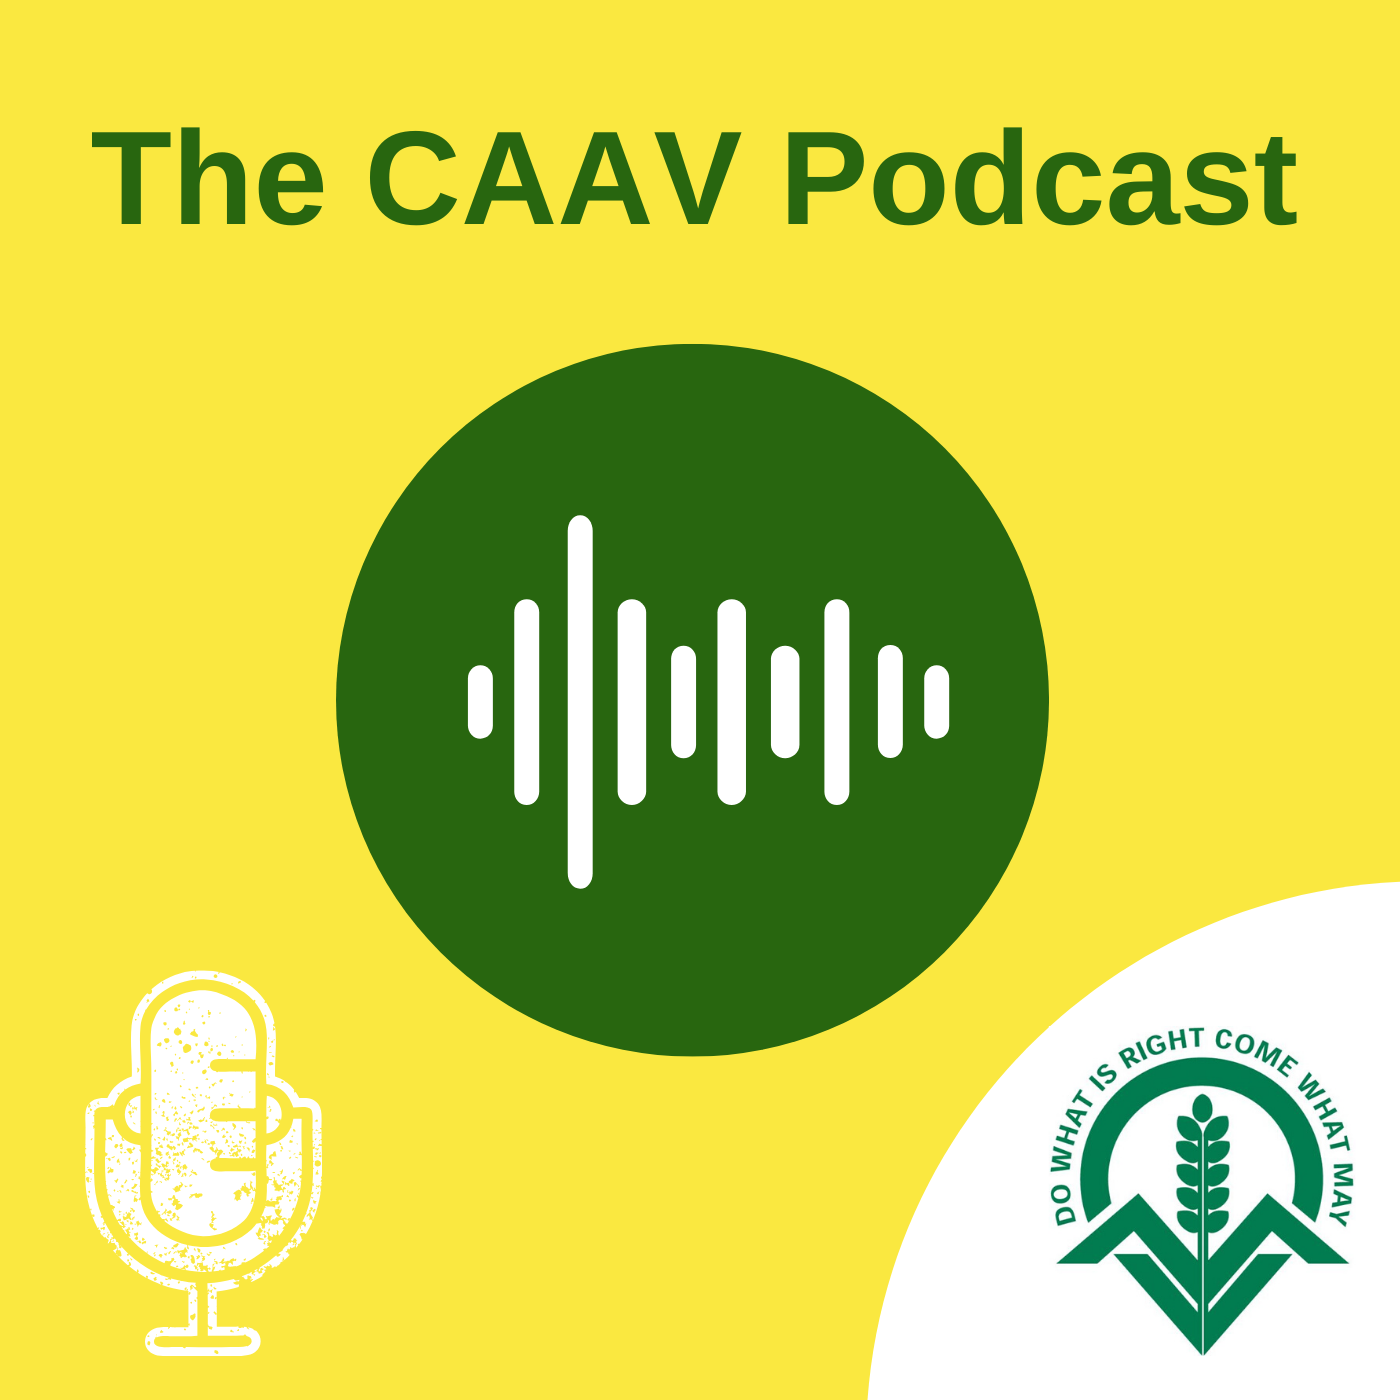 The CAAV Podcast